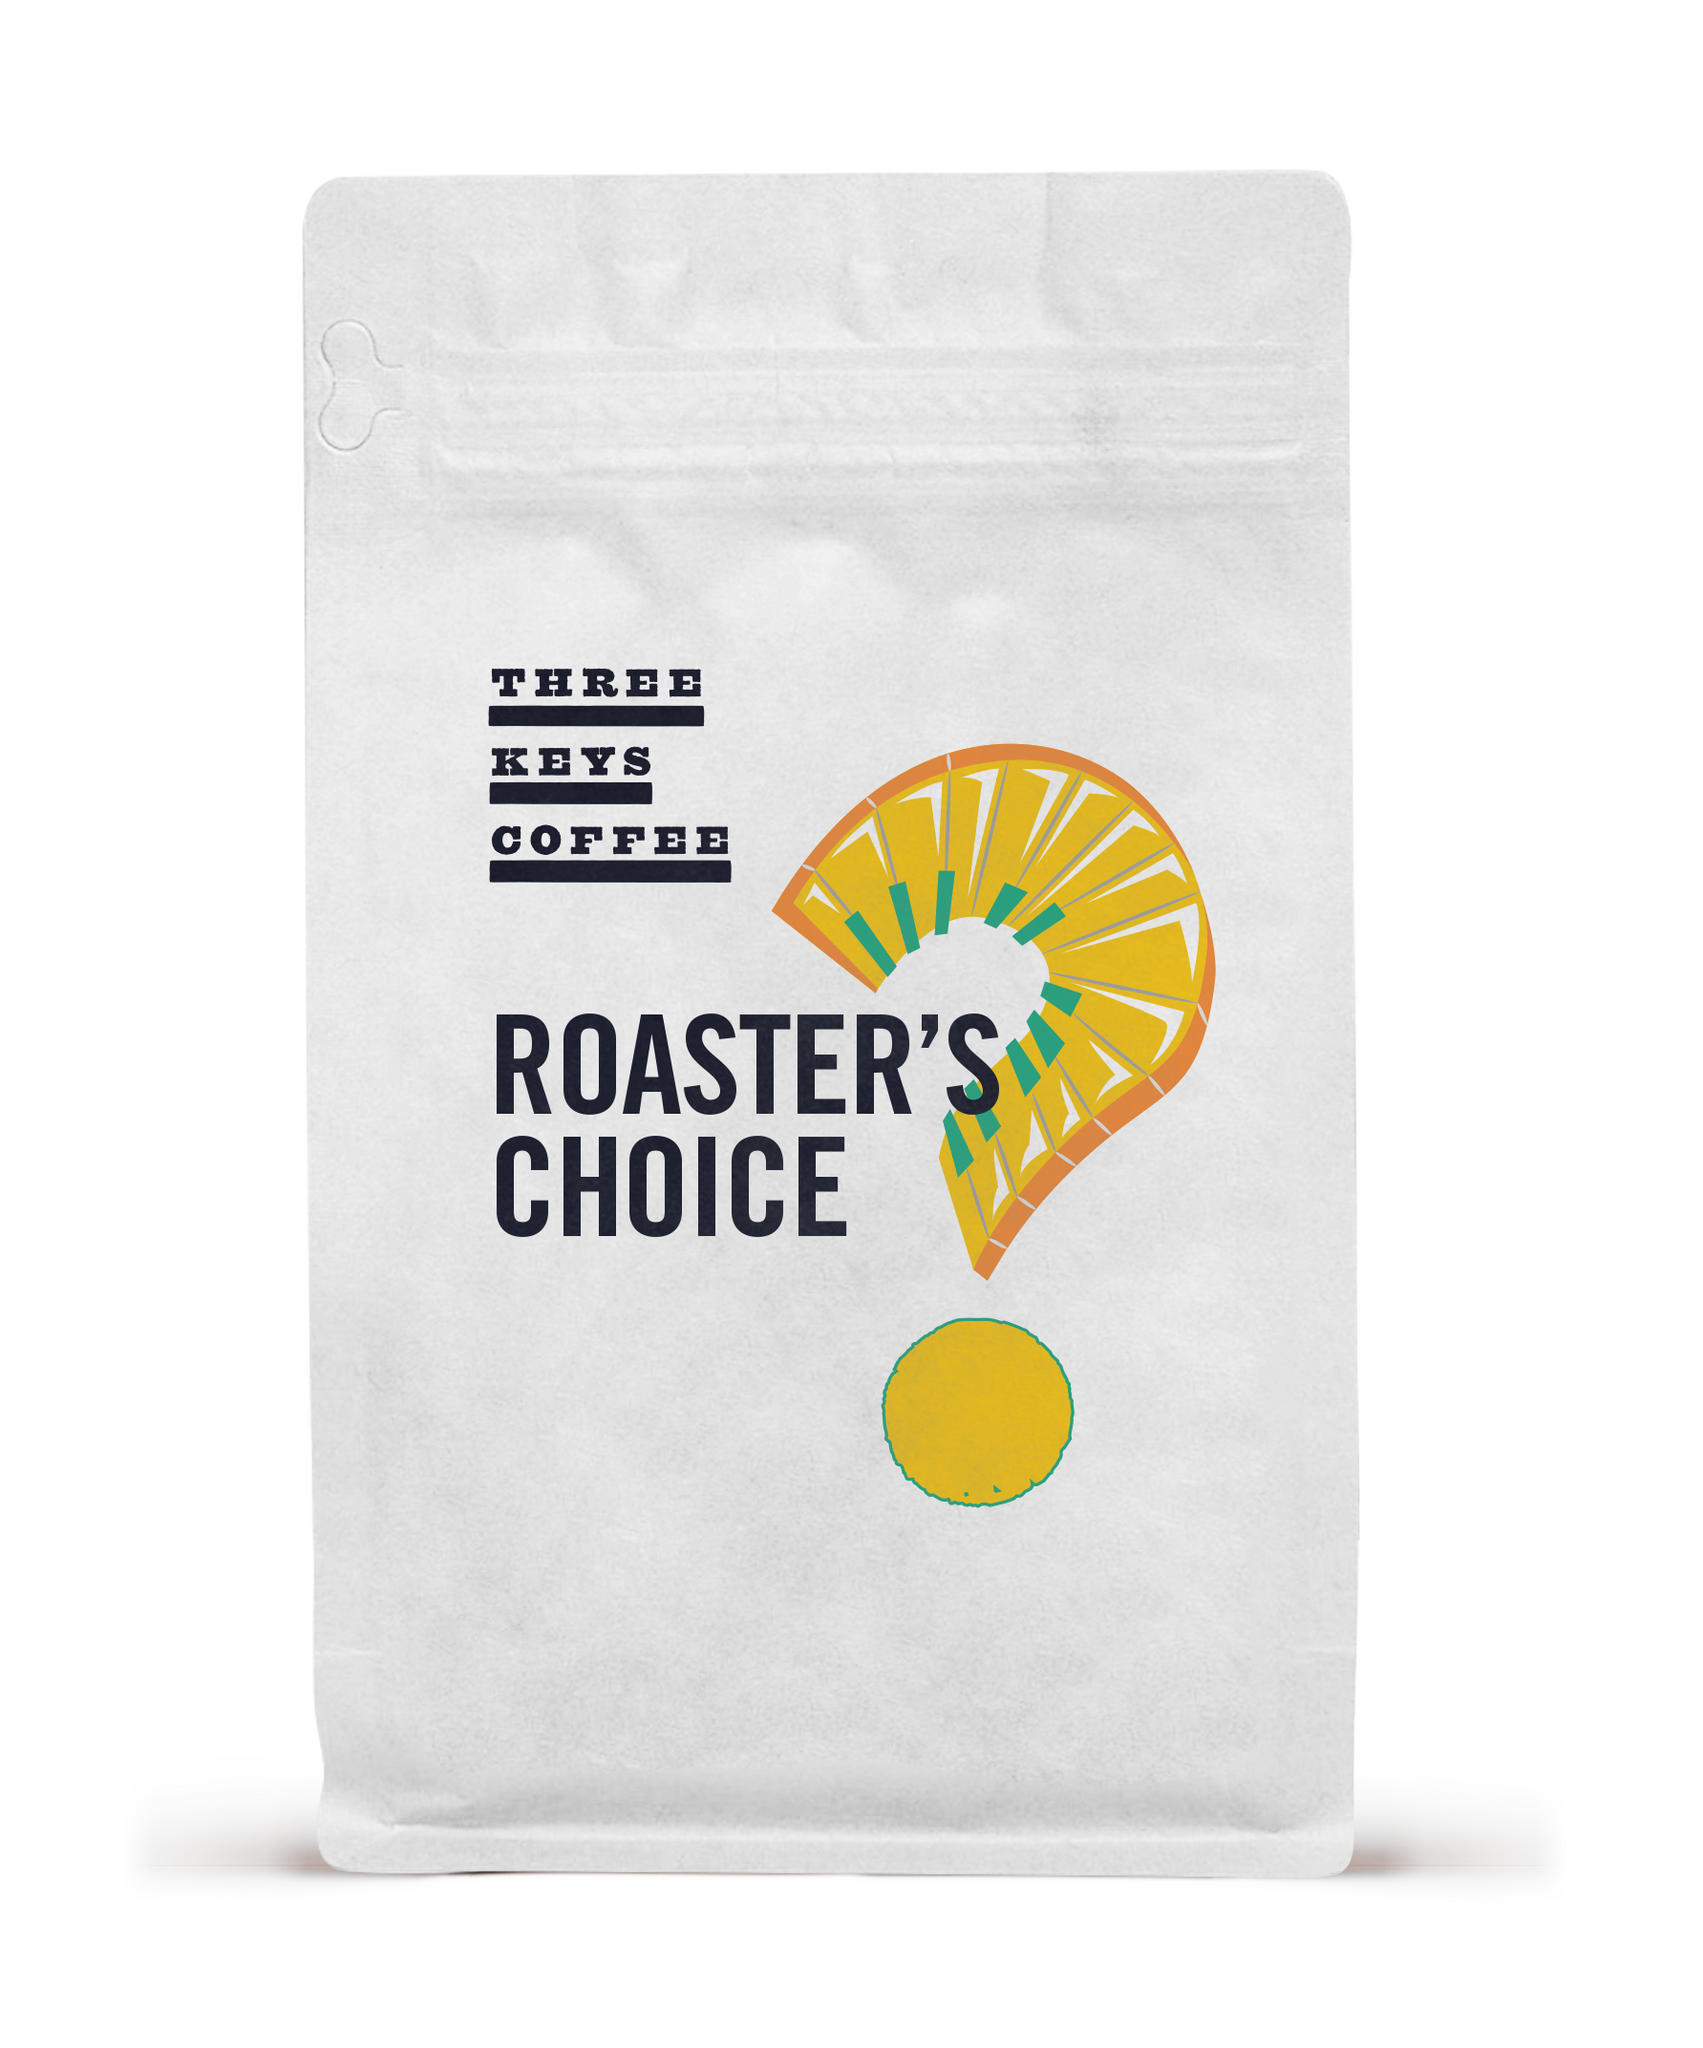 Roaster's Choice (Wholesale Clearance)